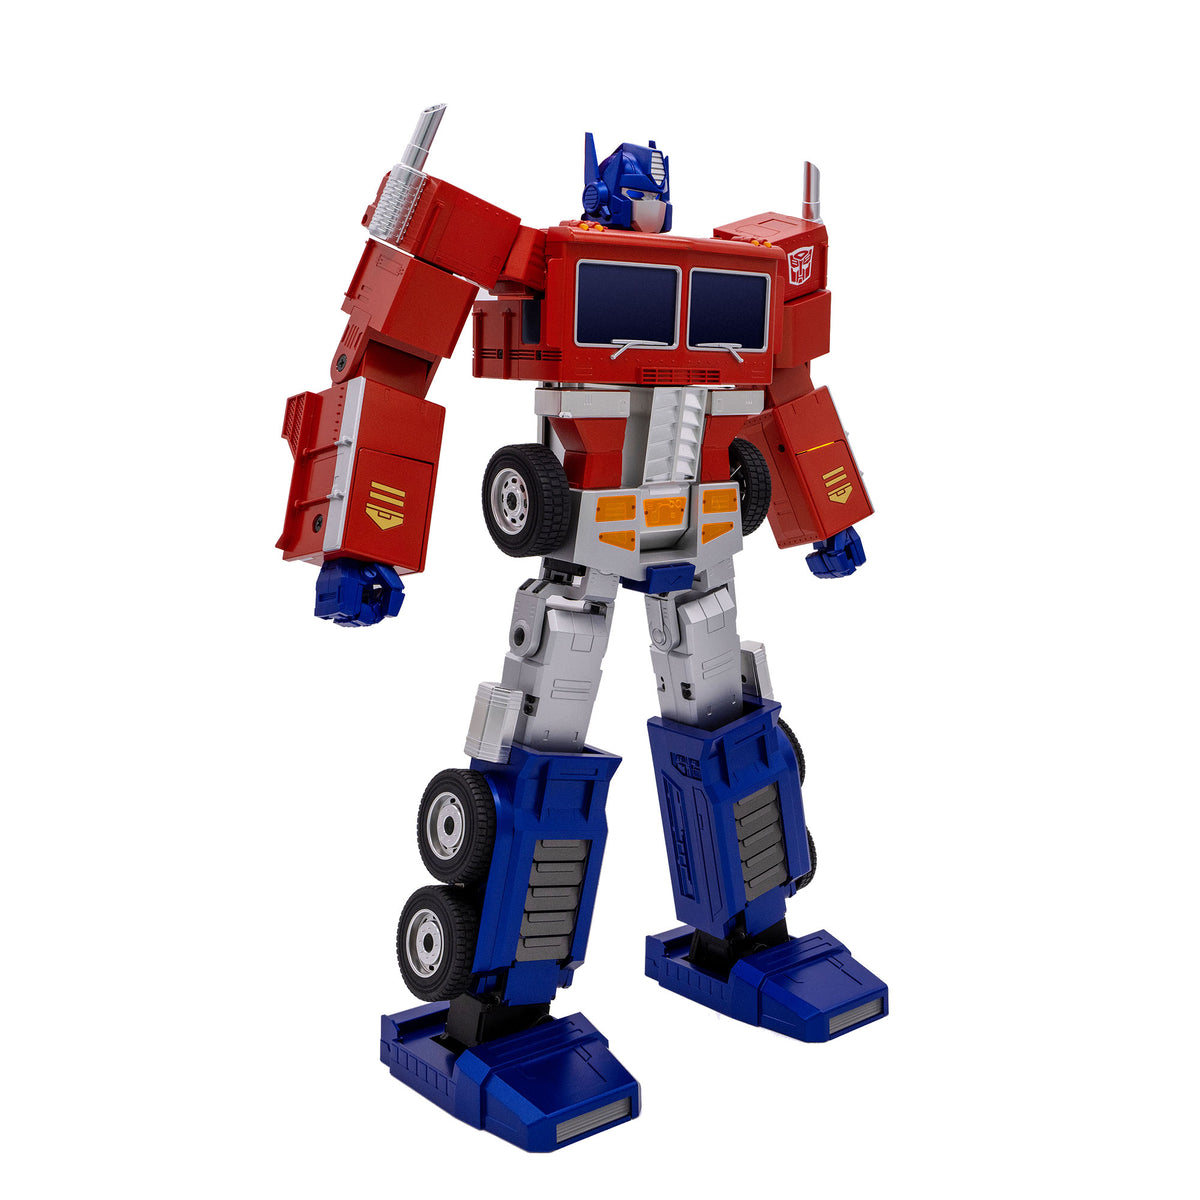 Transformers Optimus Prime Auto-Converting Robot (Elite) by Robosen –  Hasbro Pulse